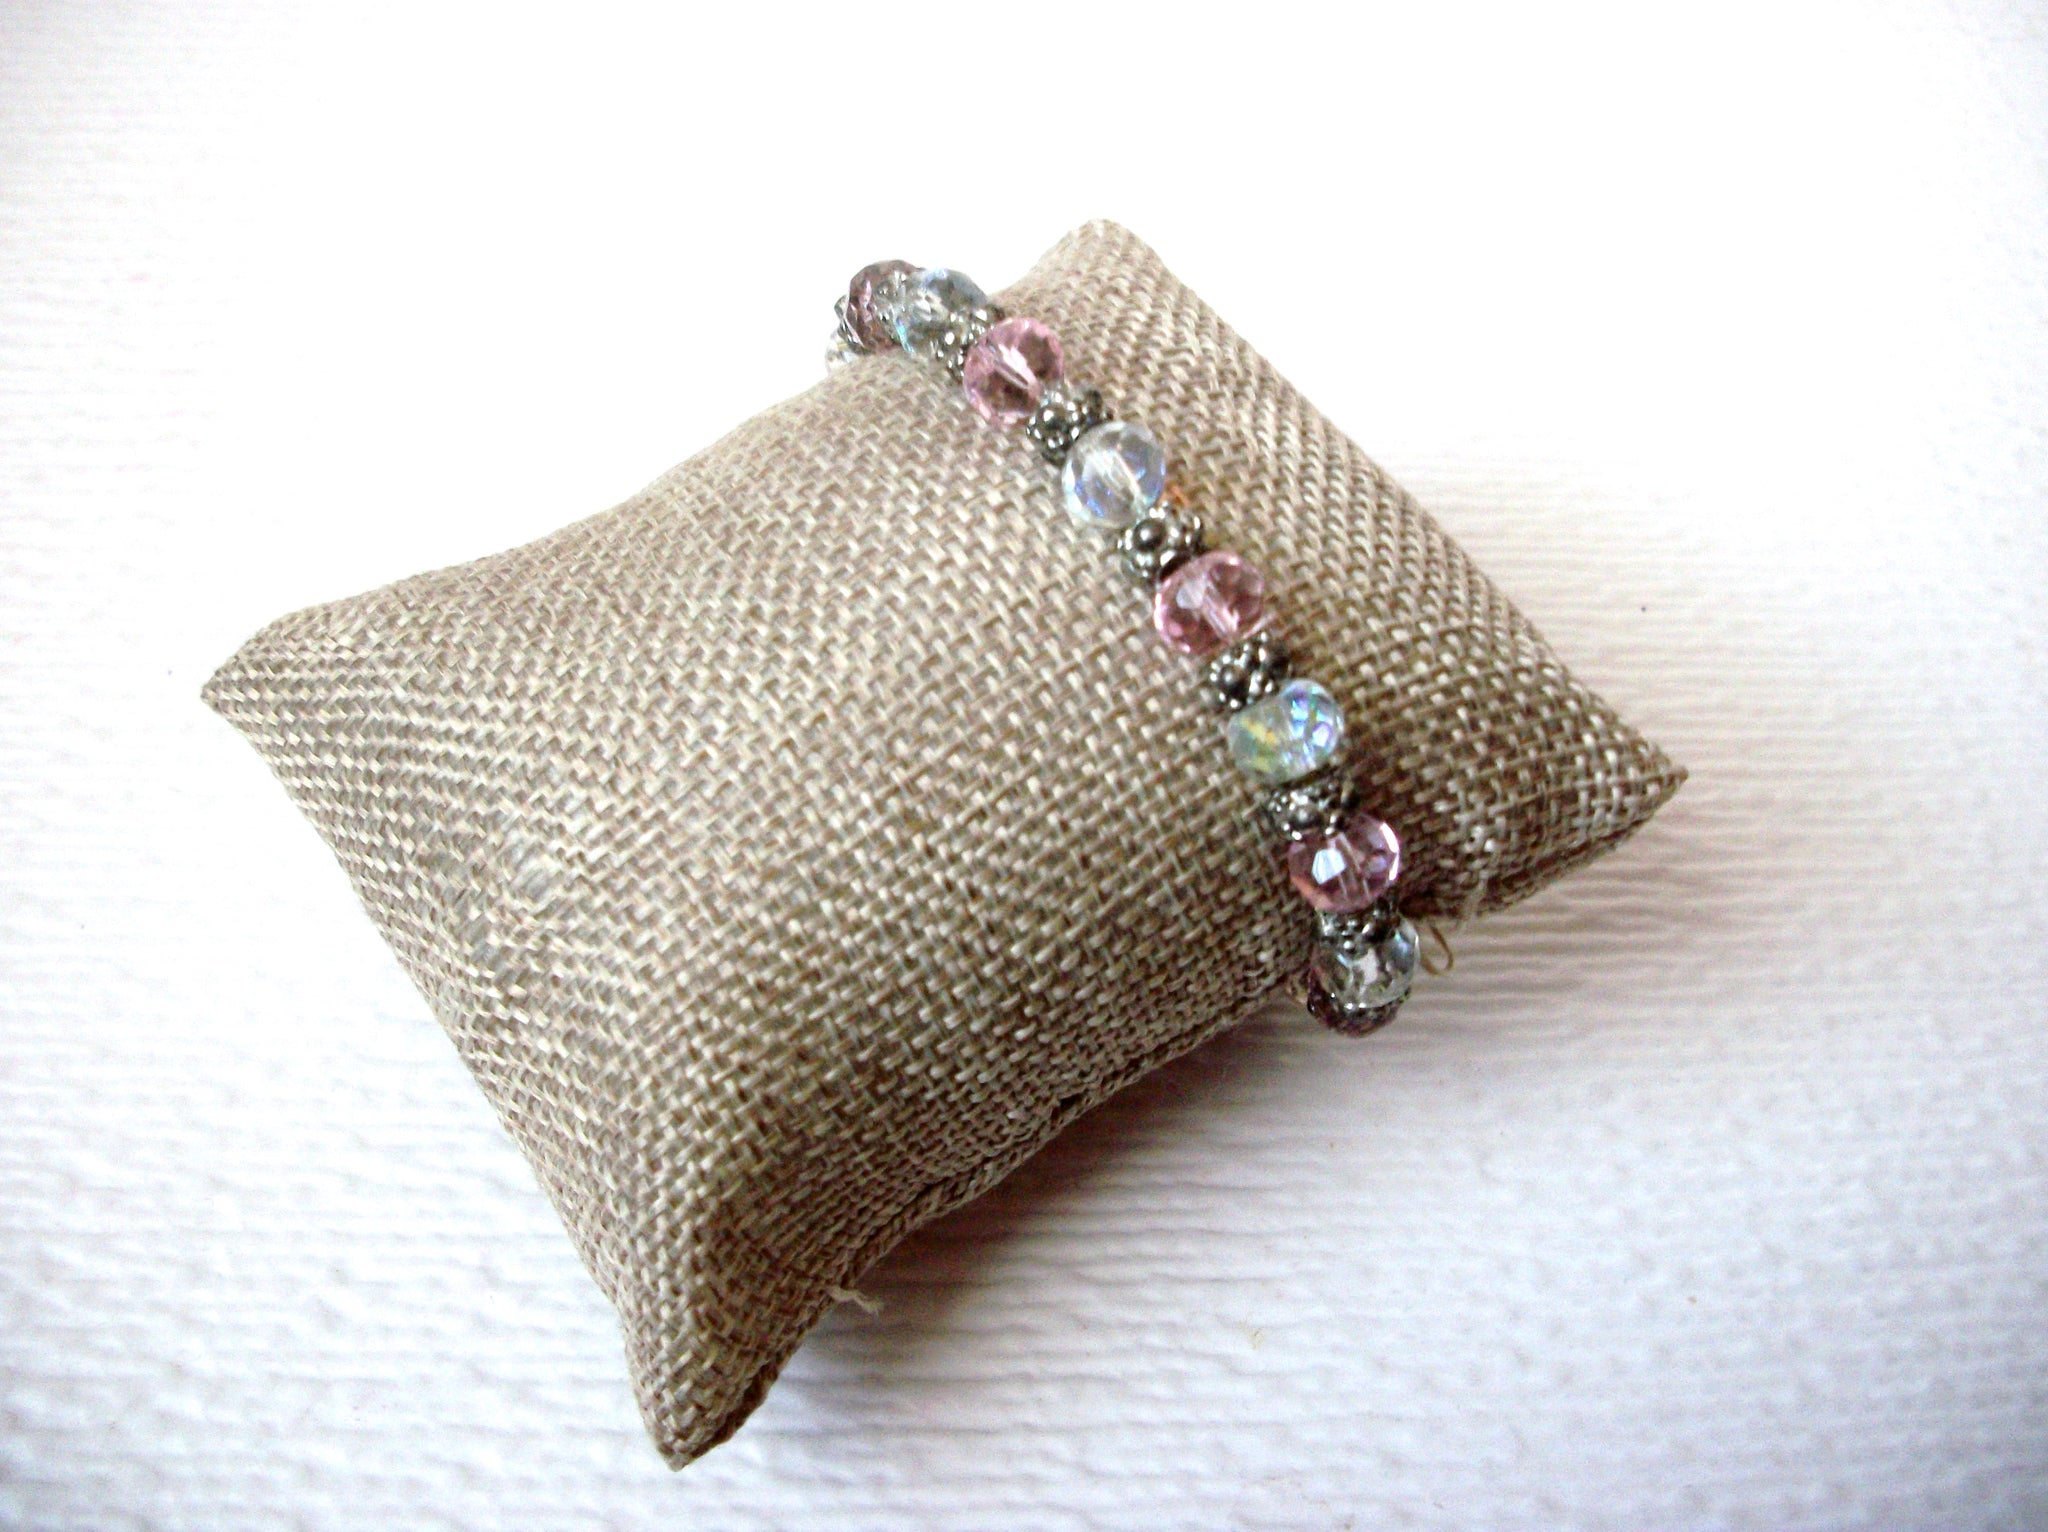 Retro Crystal Beads Bracelet 111820